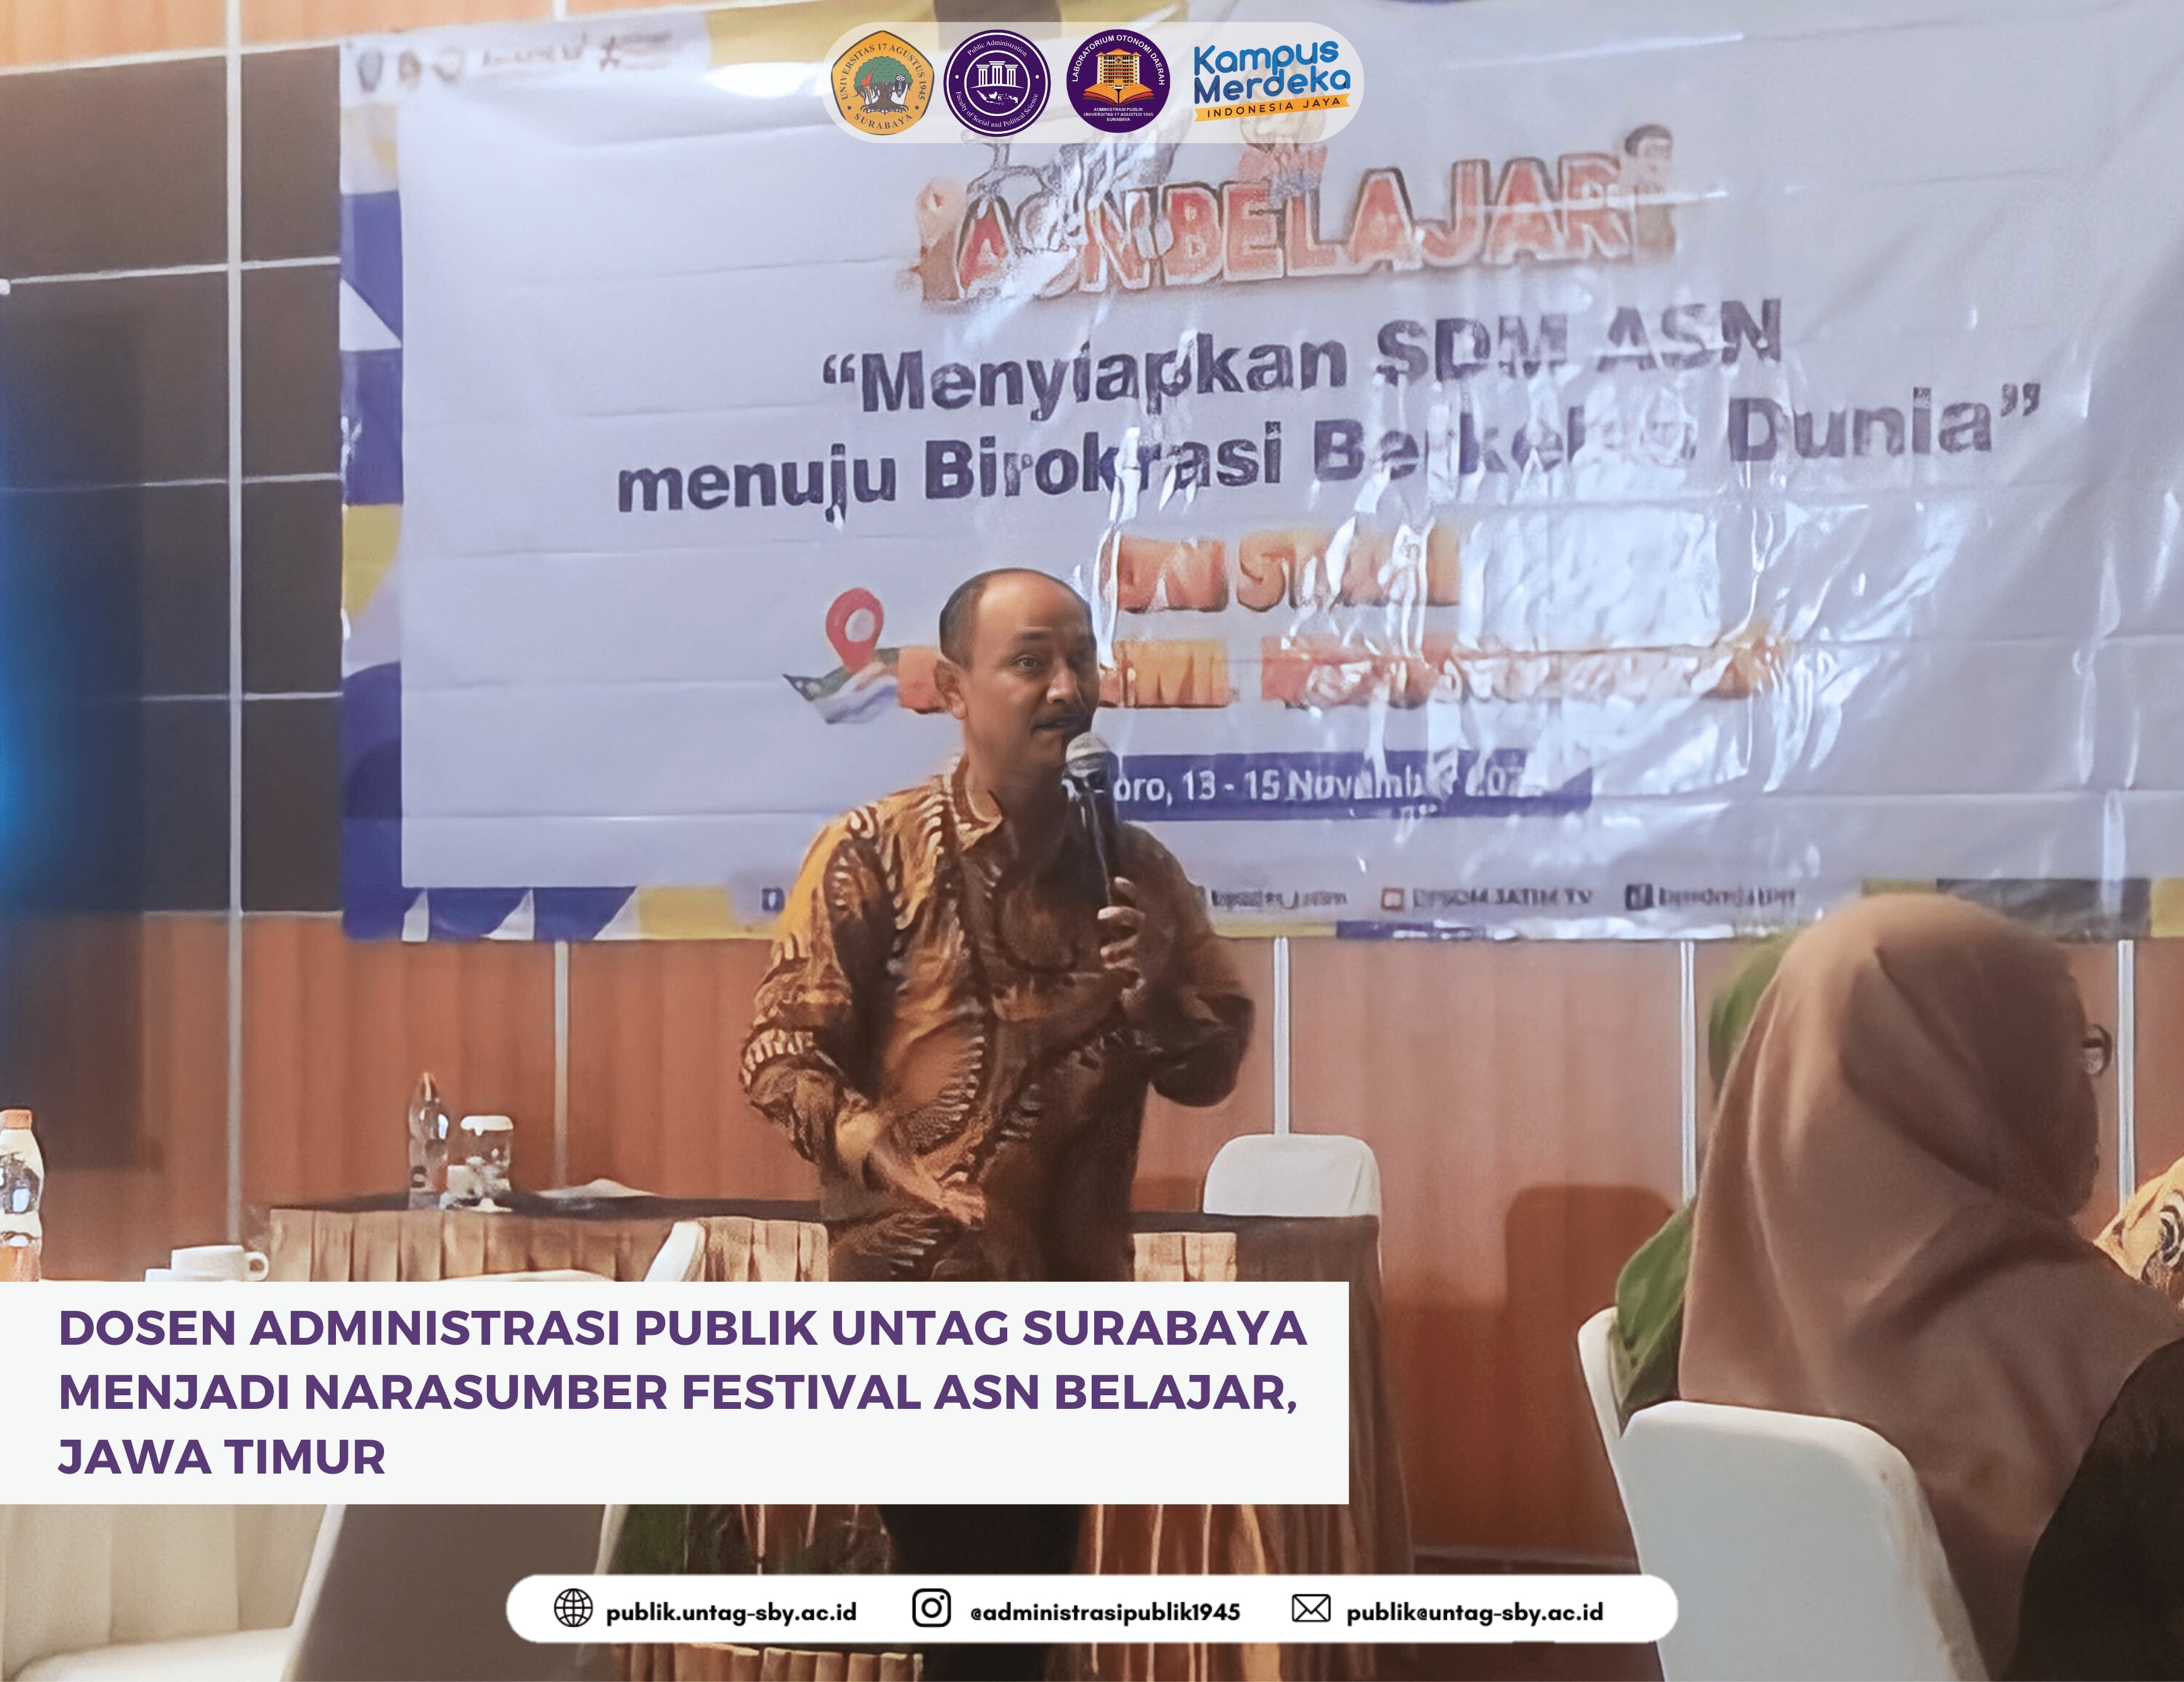 Dosen Administrasi Publik Untag Surabaya Menjadi Narasumber Festival ASN Belajar, Jawa Timur